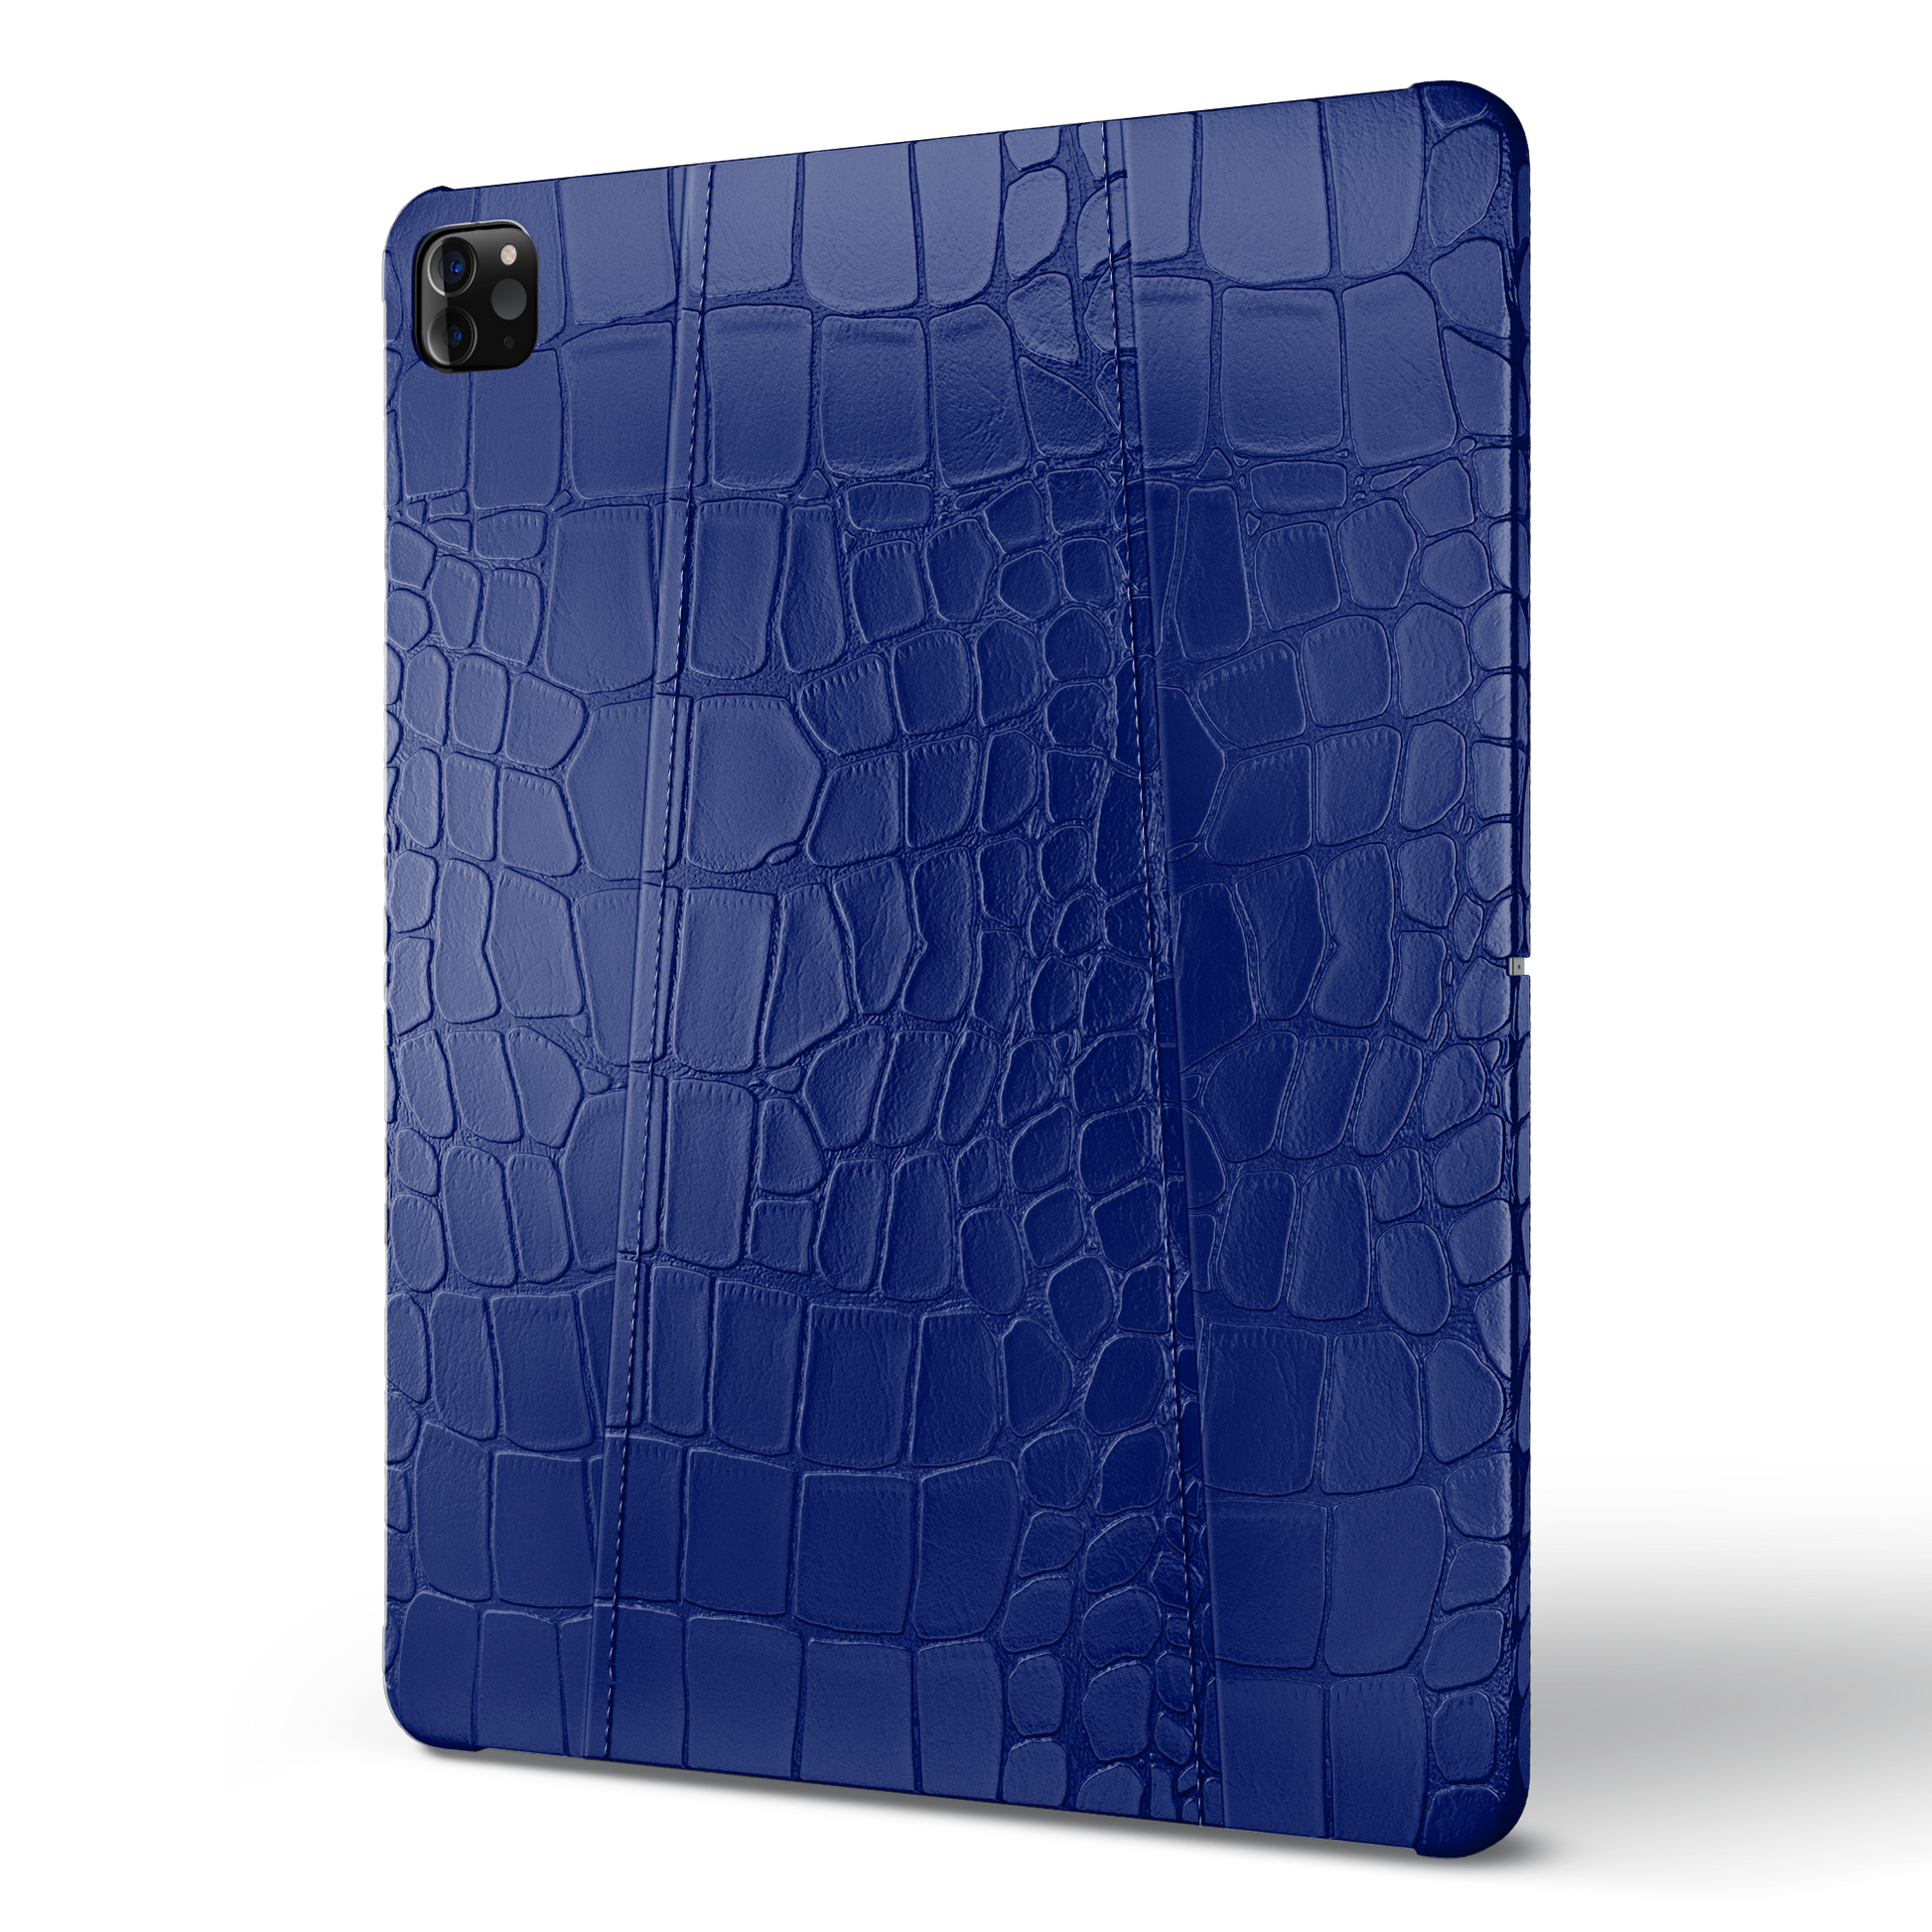 Ipad Pro (2nd-3rd-4th Gen) 11-inch Blue Peony Alligator Case